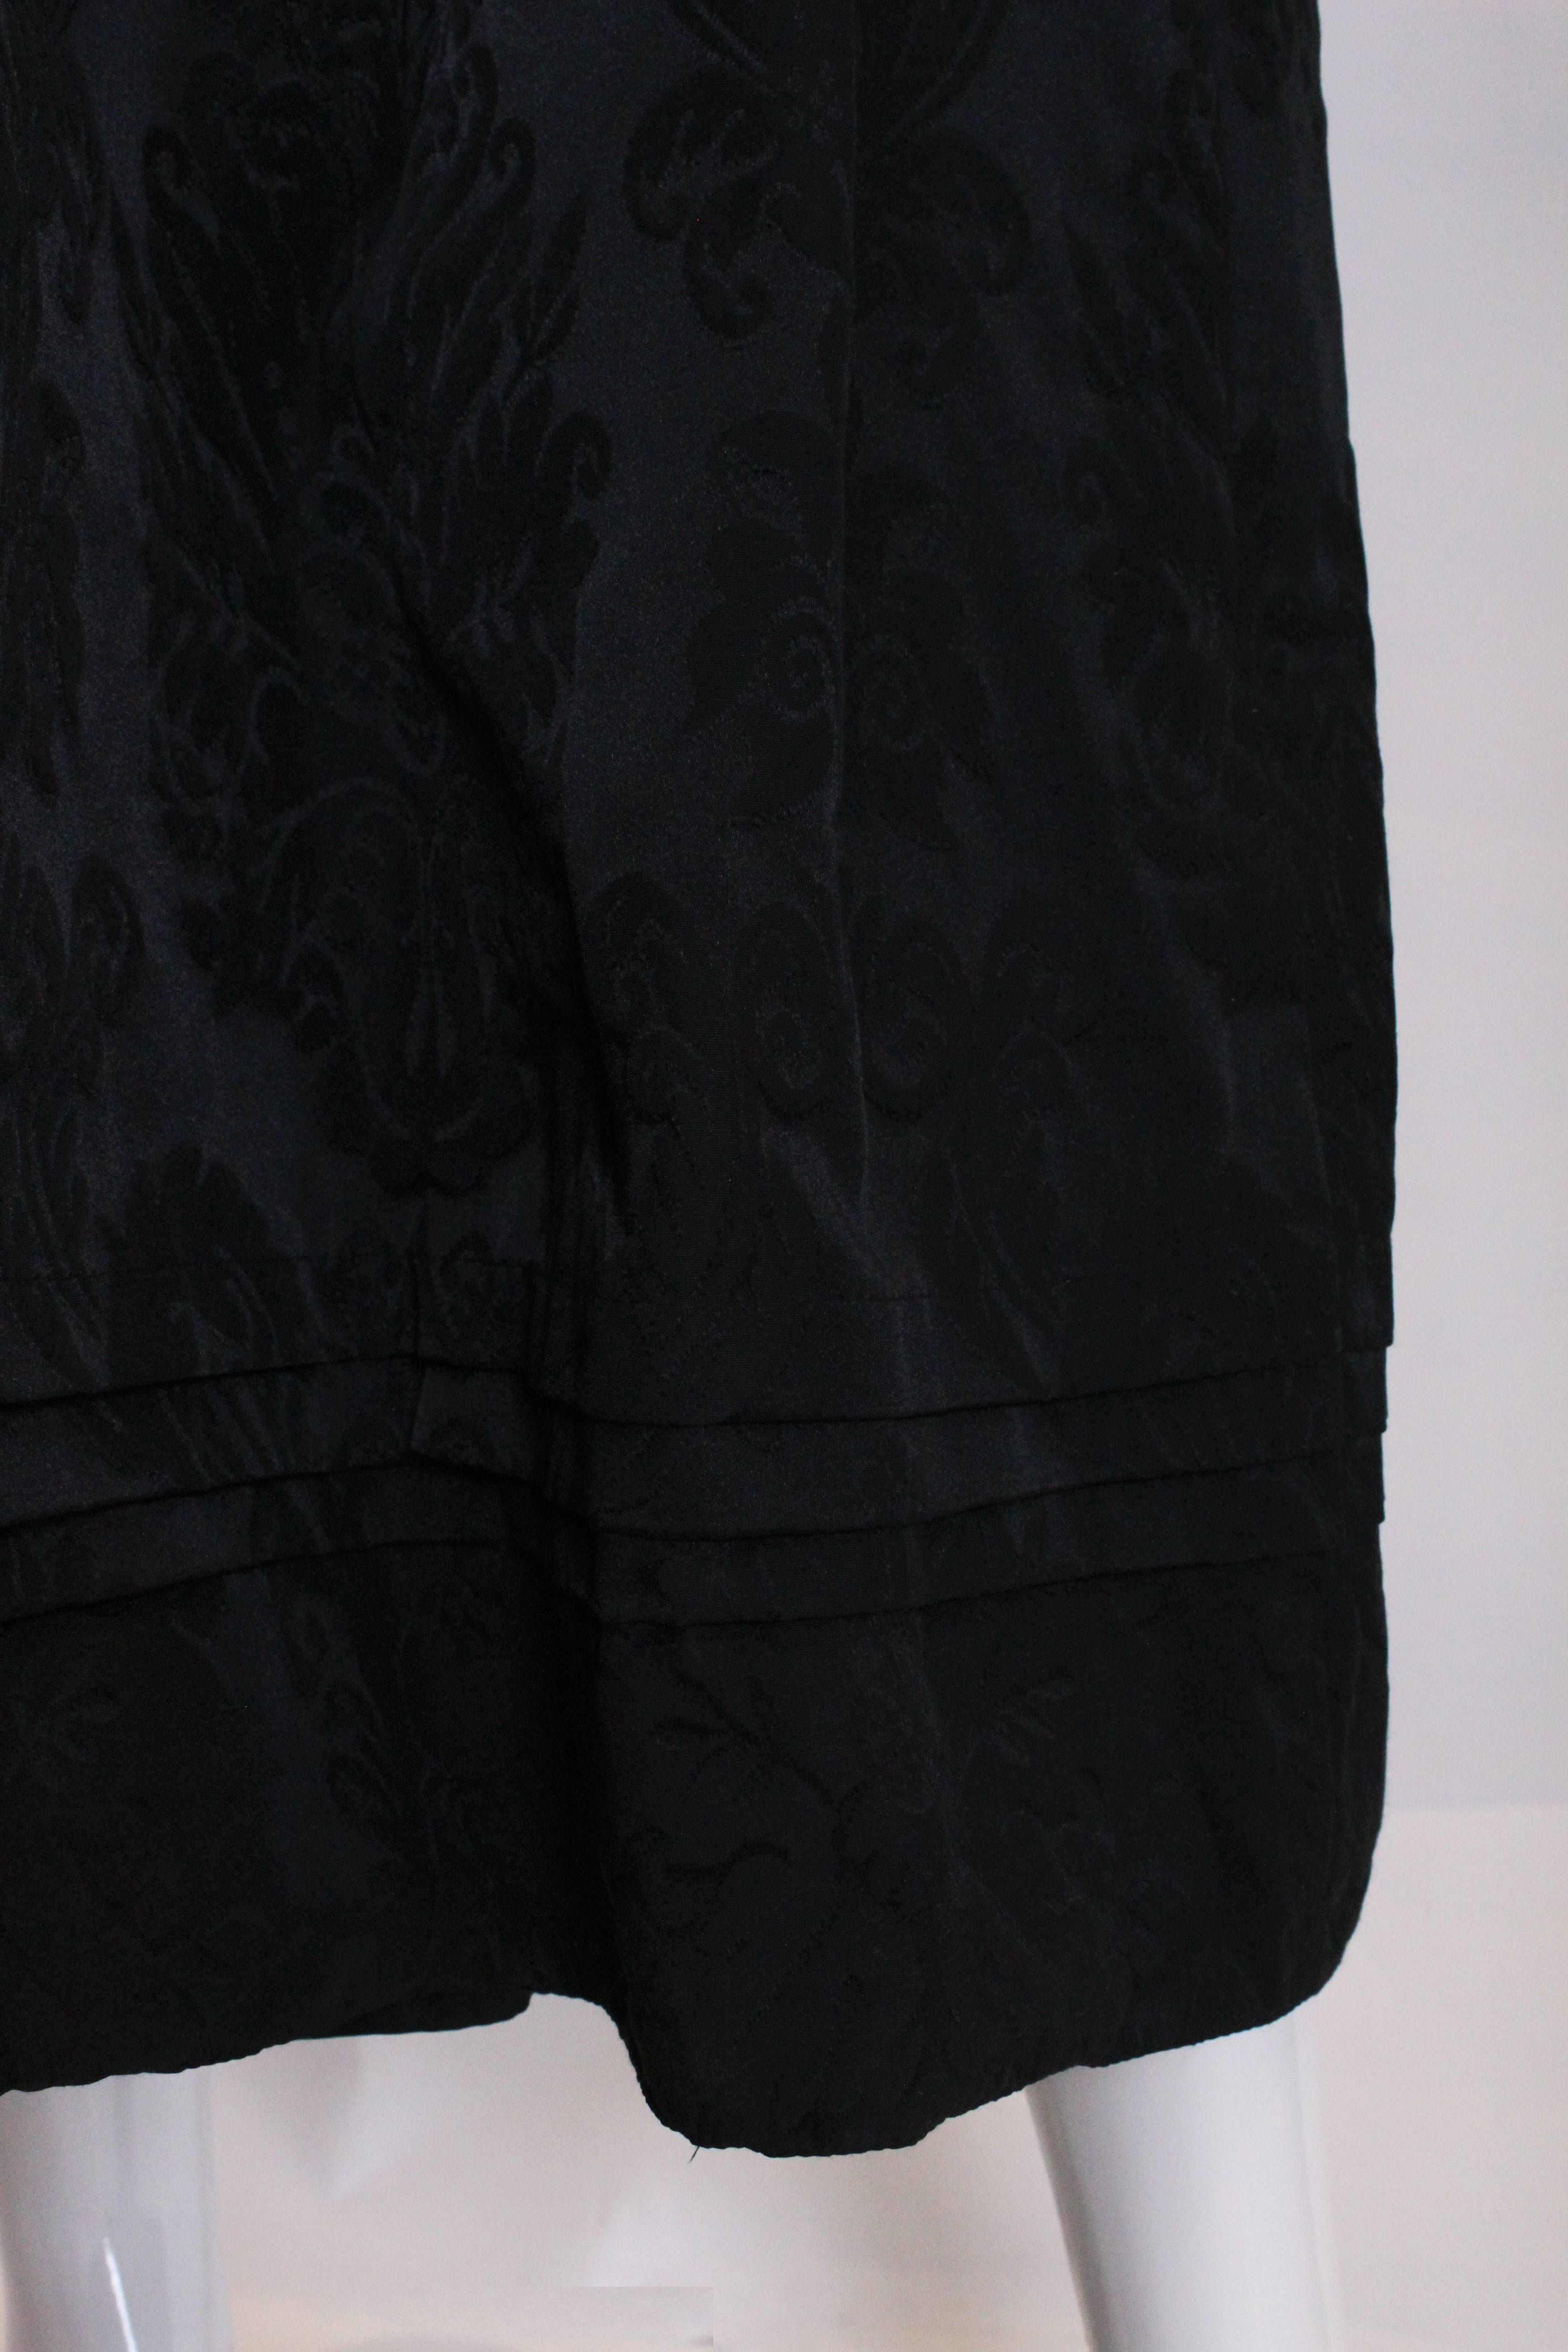  Vintage Black Evening Skirt by Louis Feraud 2